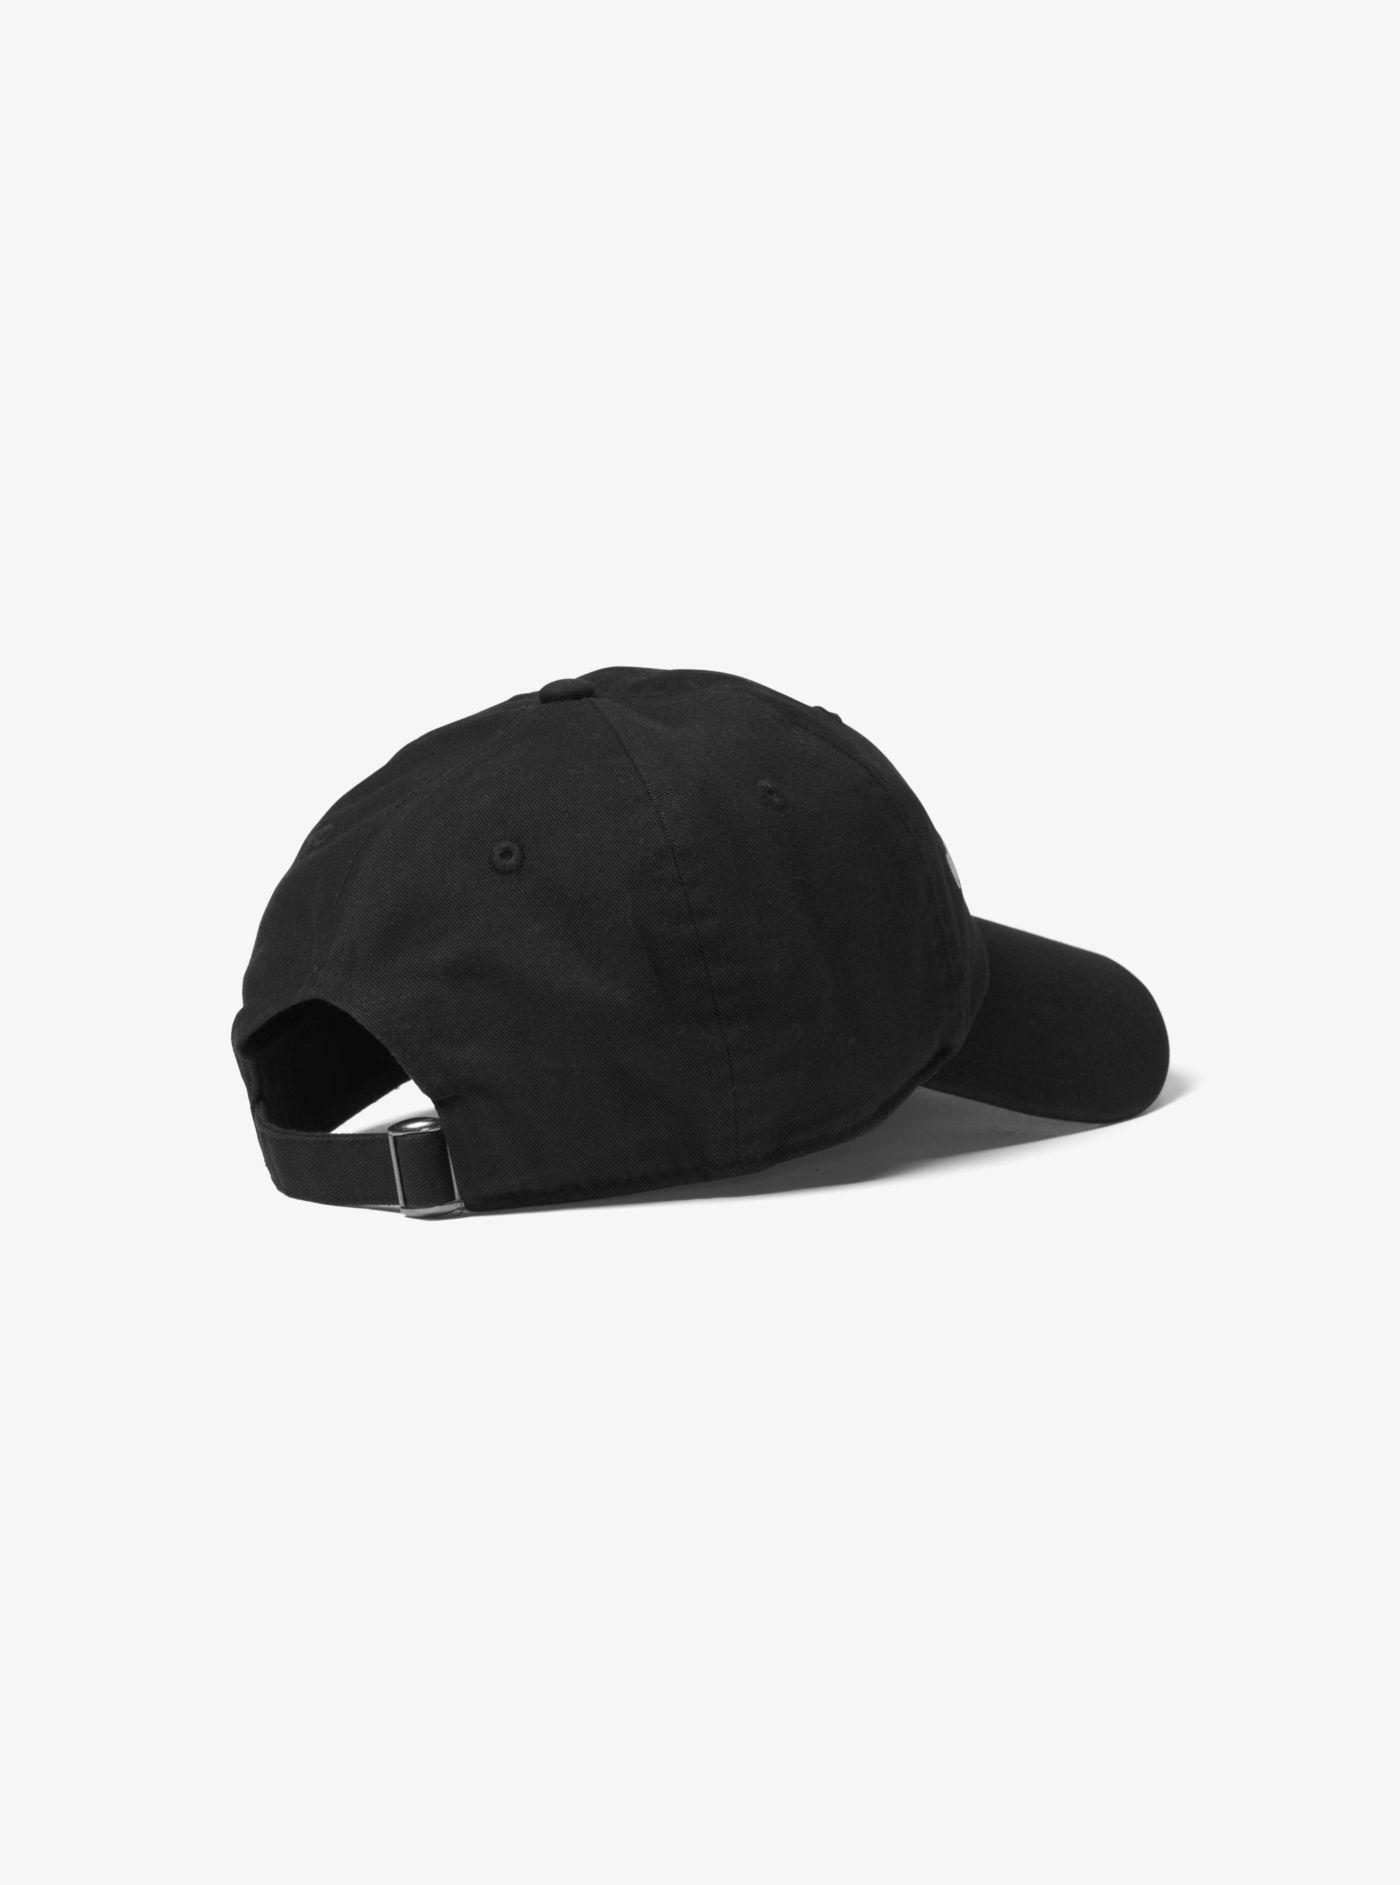 Lyst - Michael Kors Logo Cotton Cap in Black for Men